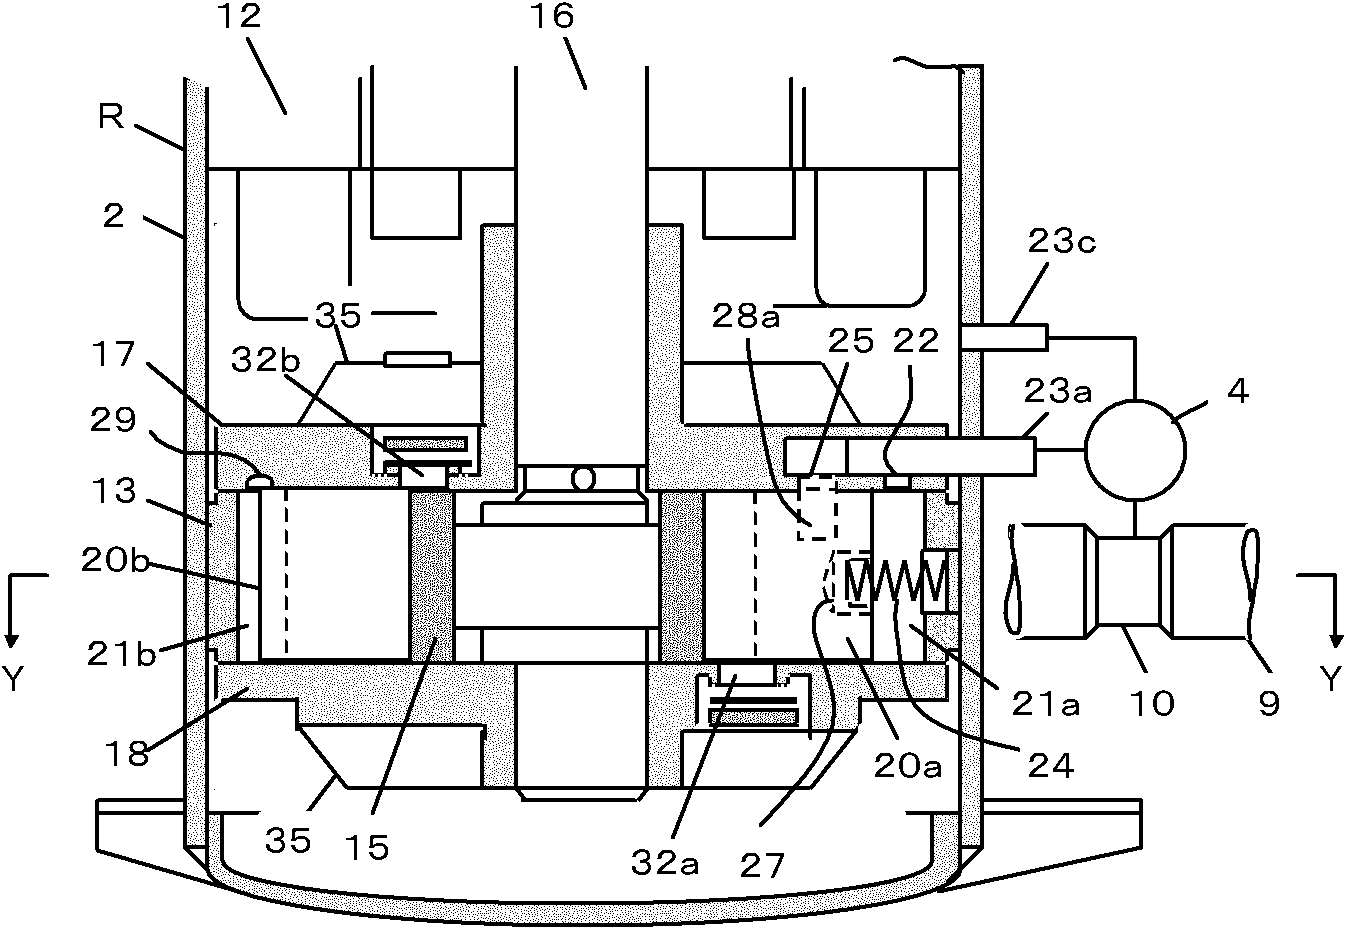 Capacity-varying rotary type compressor